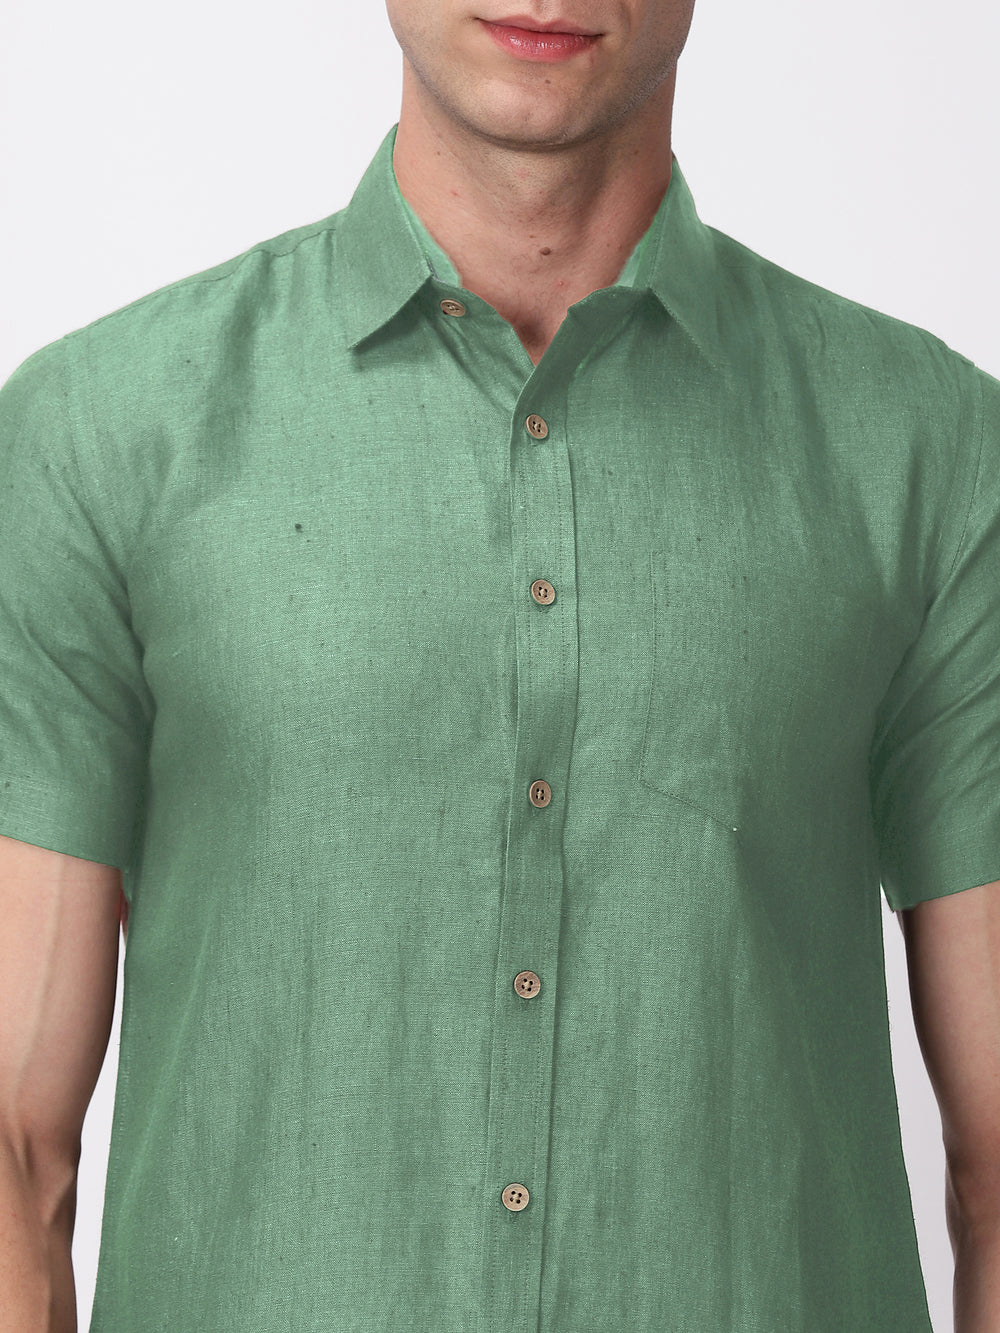 Harvey - Pure Linen Half Sleeve Shirt - Smoke Green